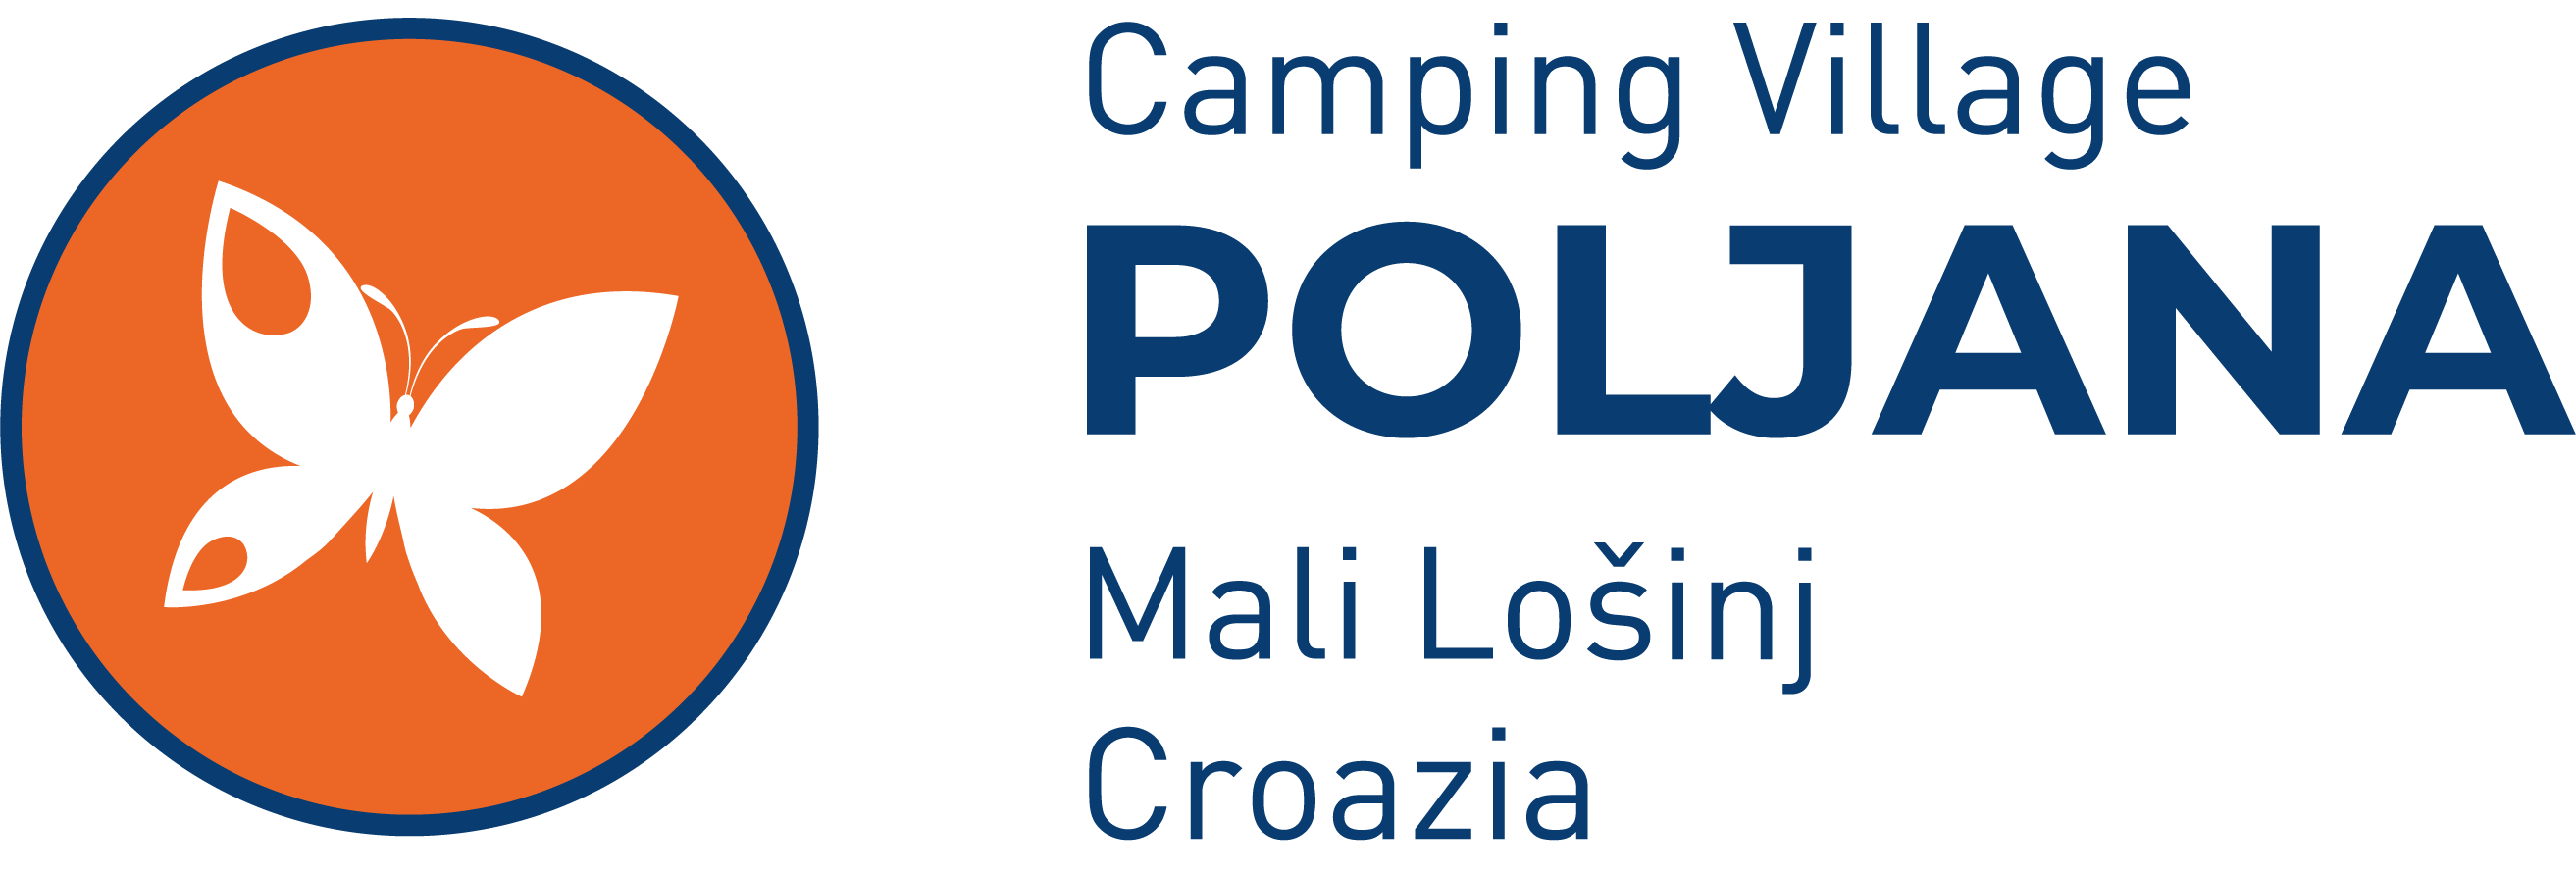 Camping Village Poljana